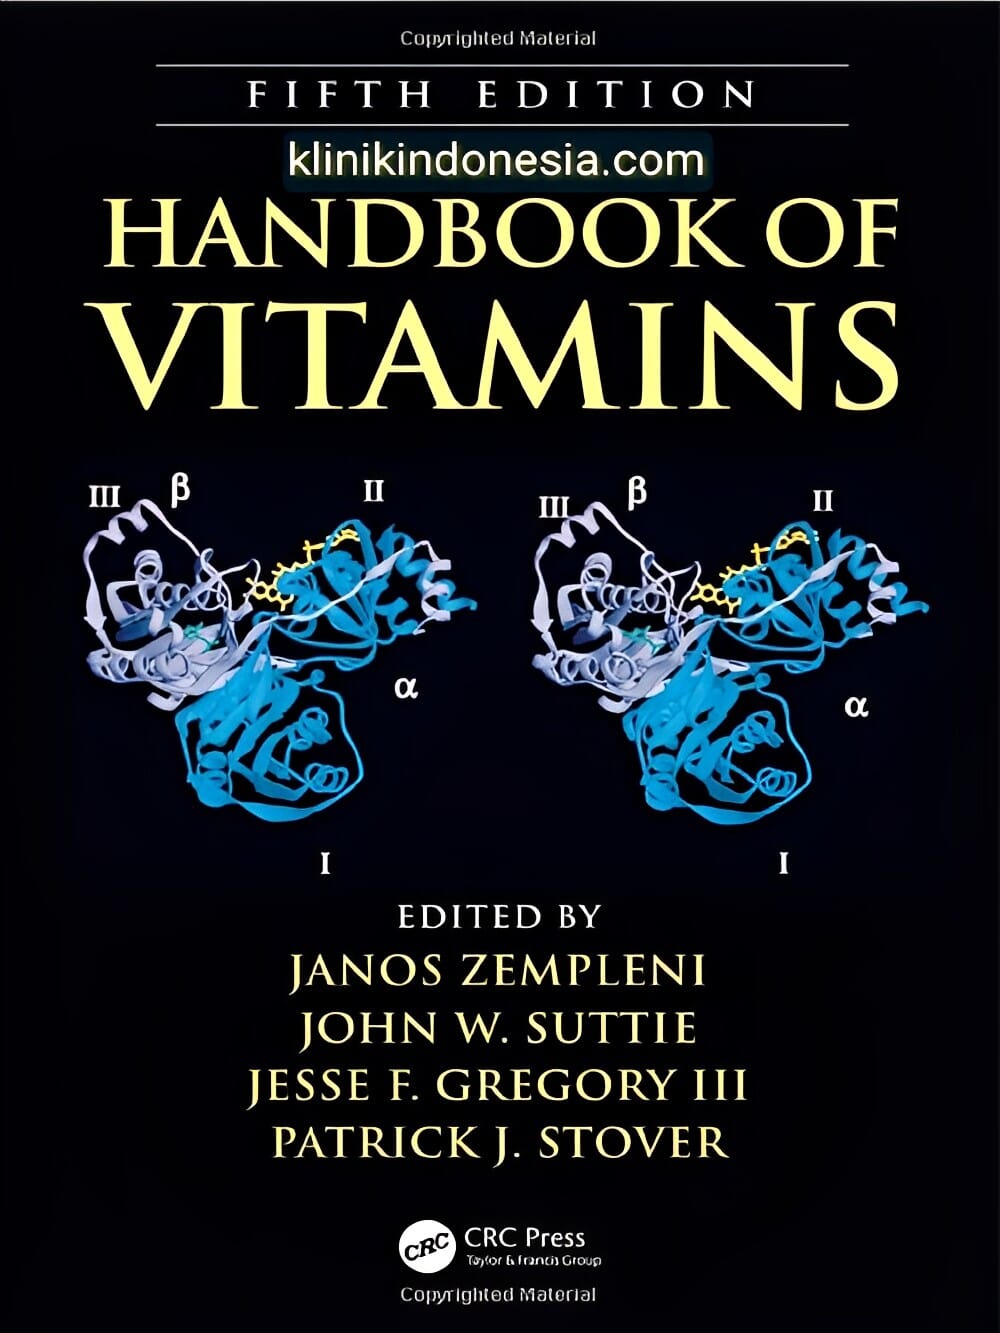 Gambar Handbook of Vitamins